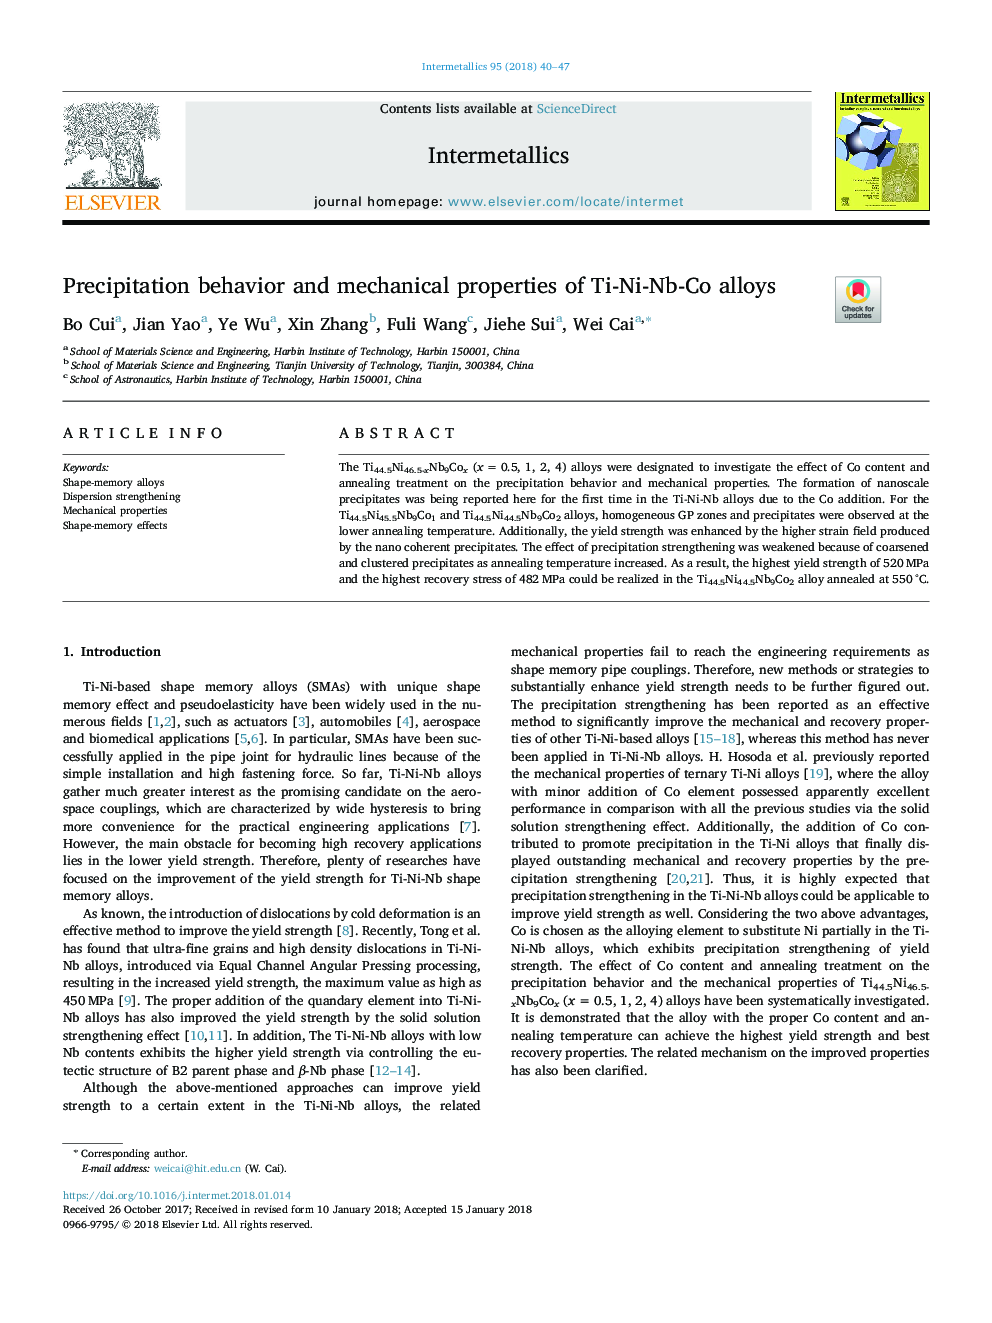 Precipitation behavior and mechanical properties of Ti-Ni-Nb-Co alloys